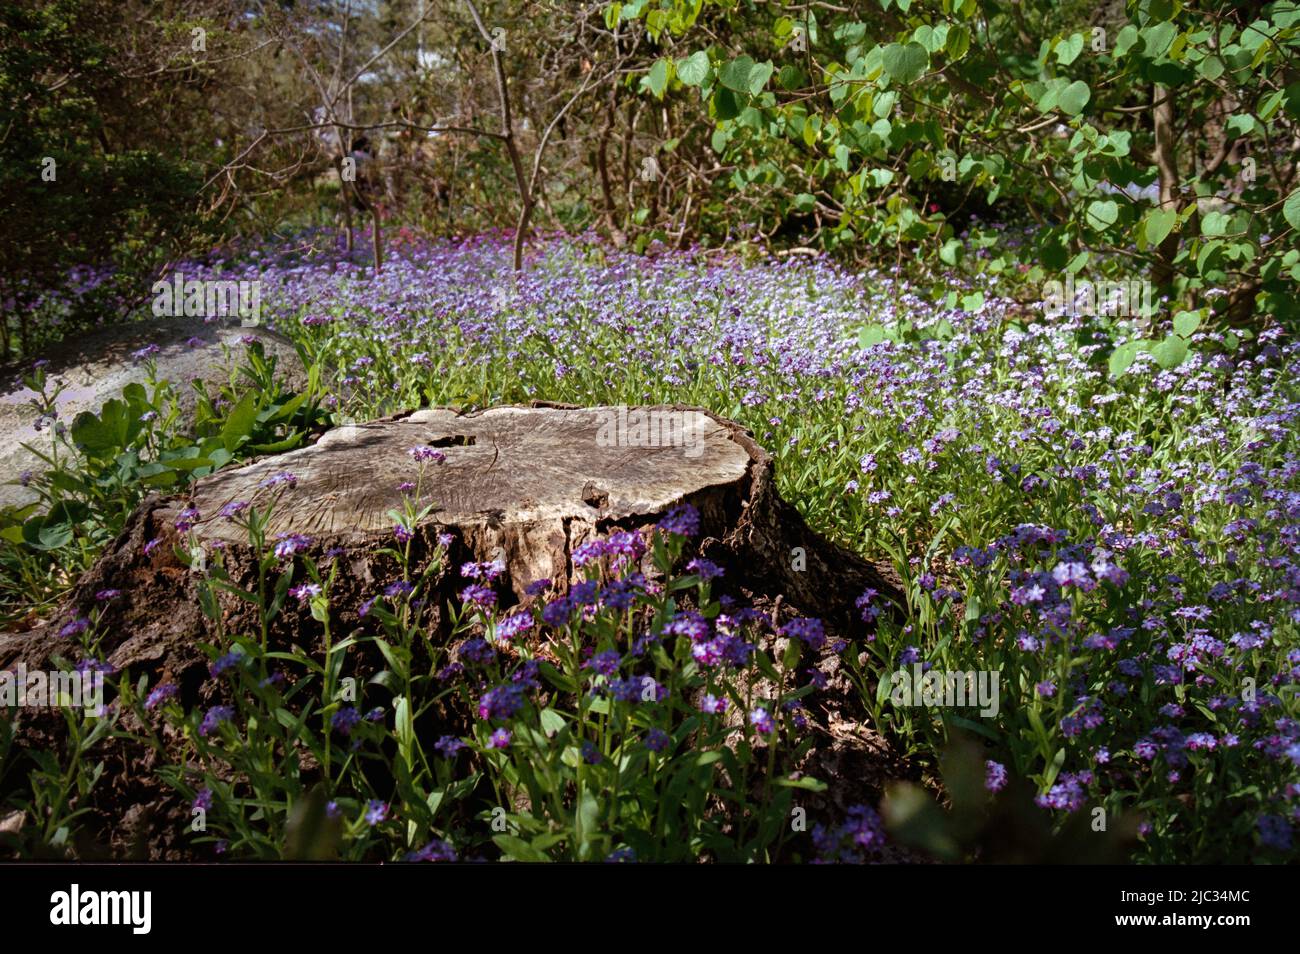 Purple Cascading Aubrieta flowers surrounding and old weathered stump. Image captured on analog film. Stock Photo